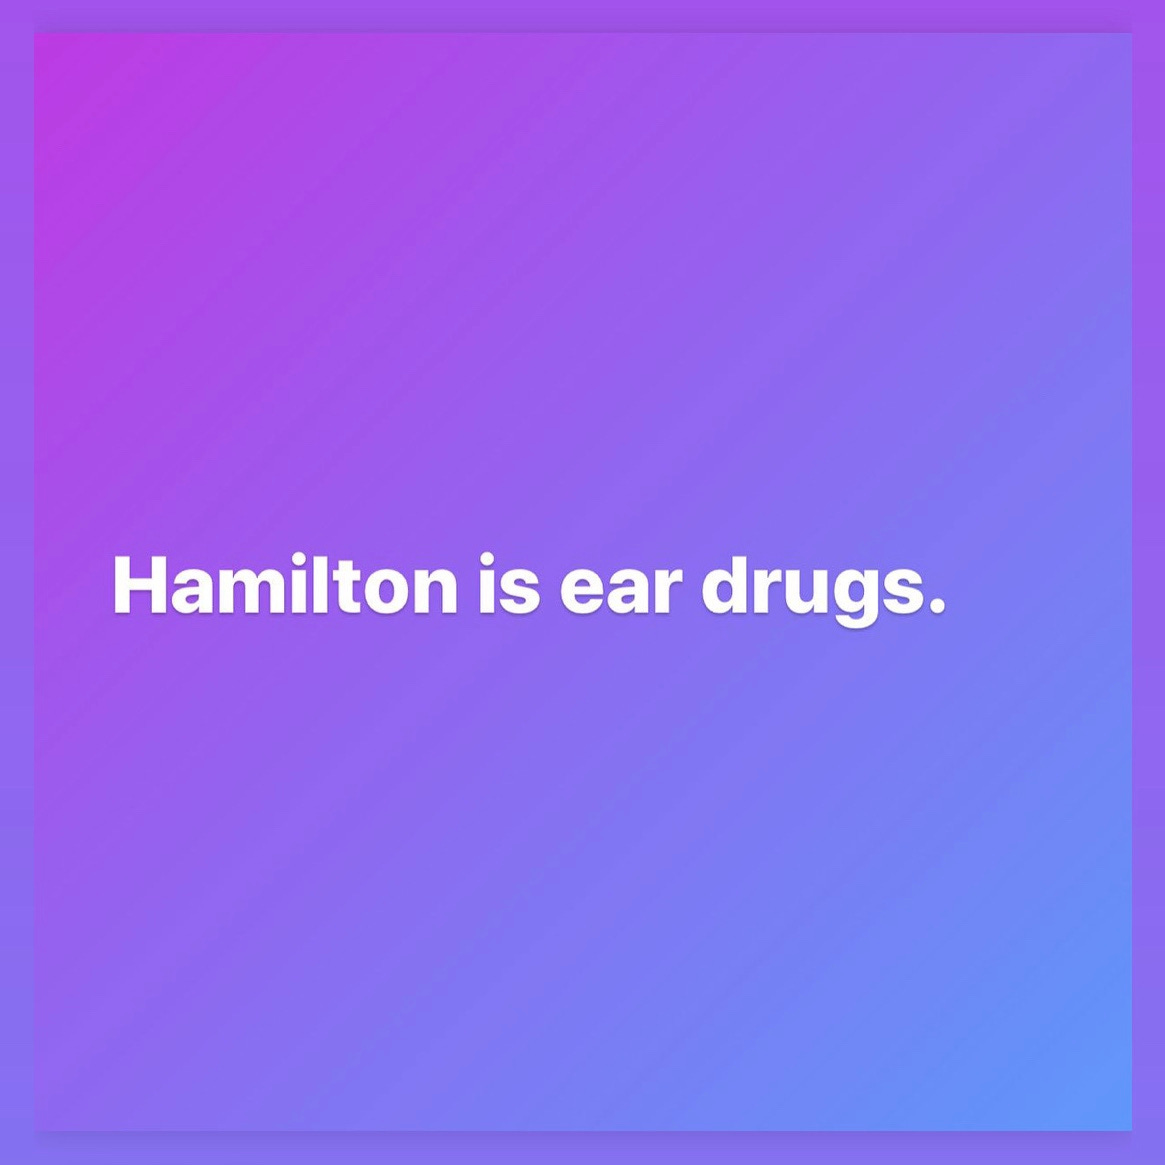 Hamilton is ear drugs